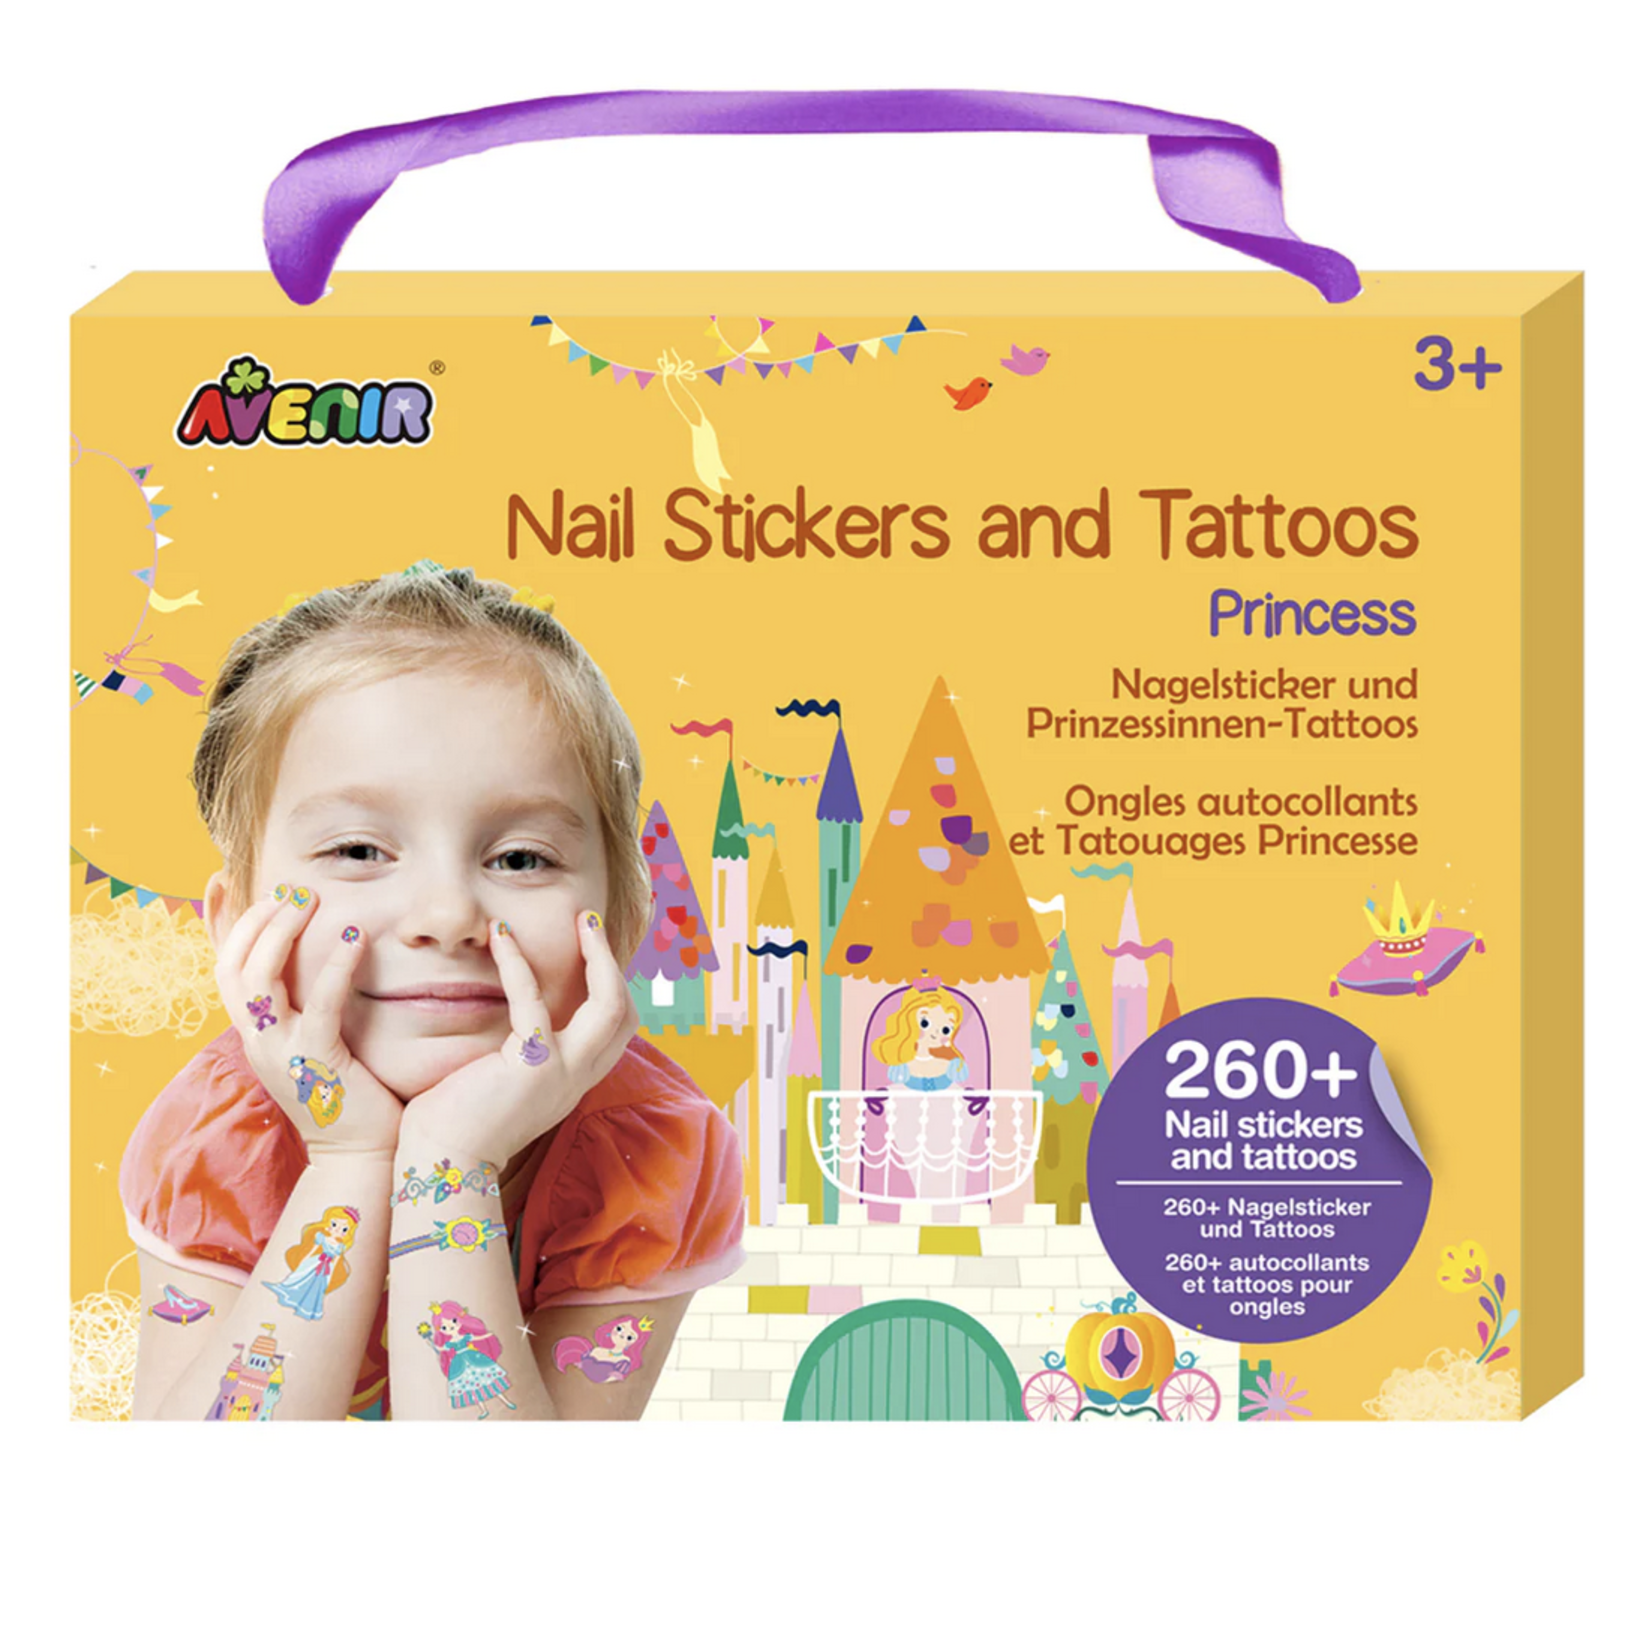 Princess Nail Stickers and Tattoos